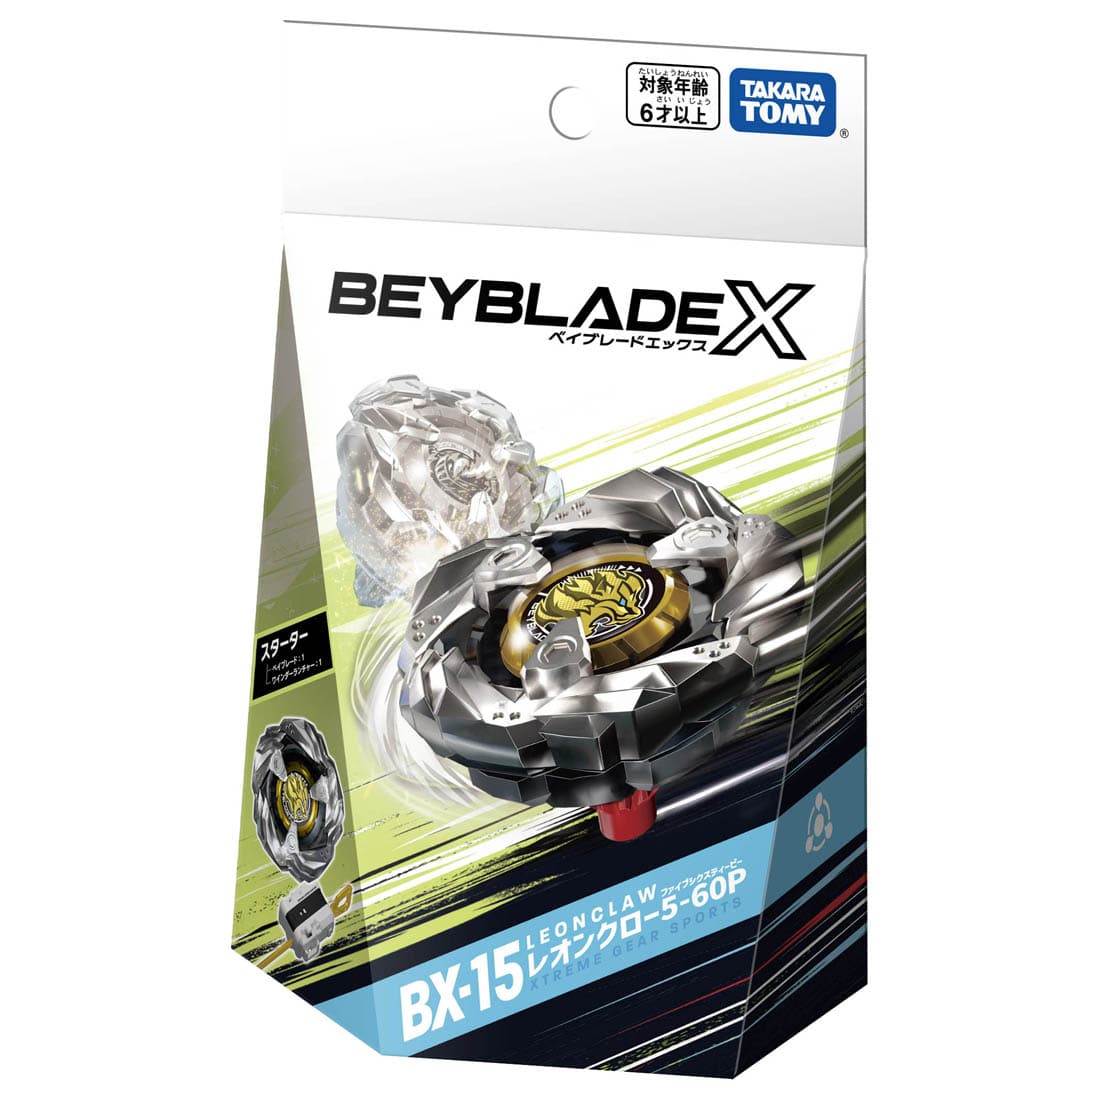 BEYBLADE X『BX-15 スターター レオンクロー5-60P』ベイブレード-004